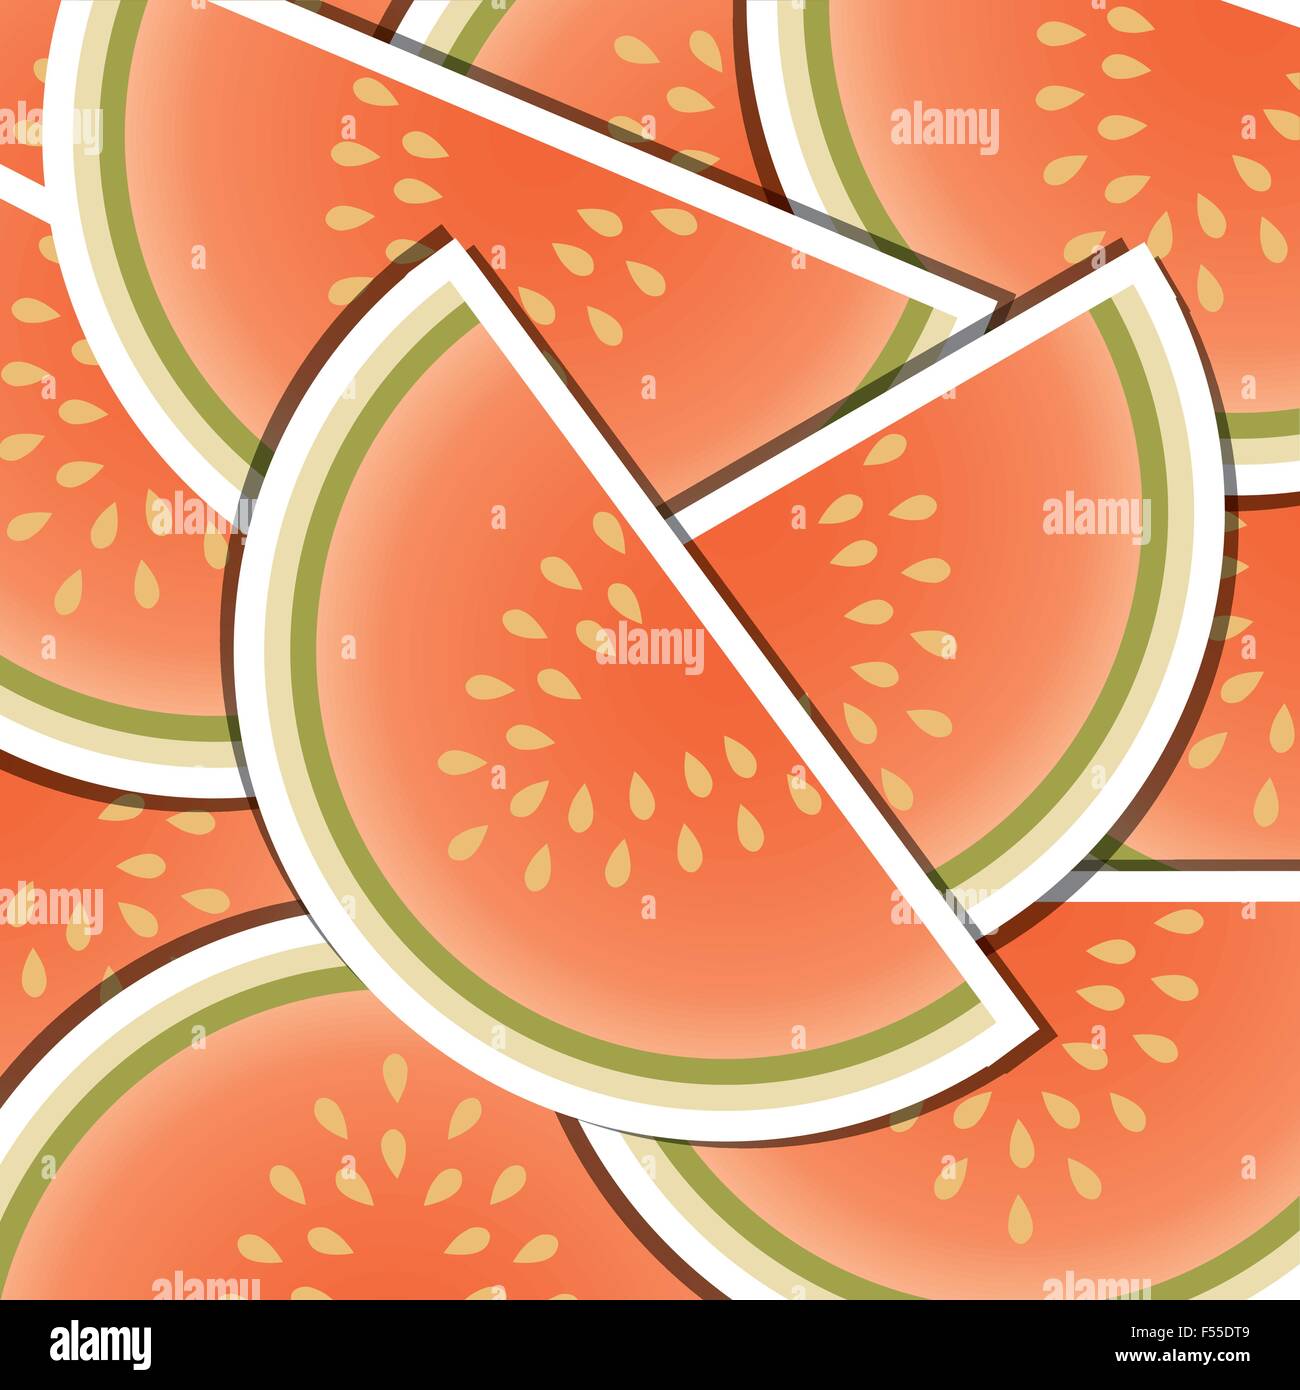 Melon slice background/card in vector format. Stock Vector